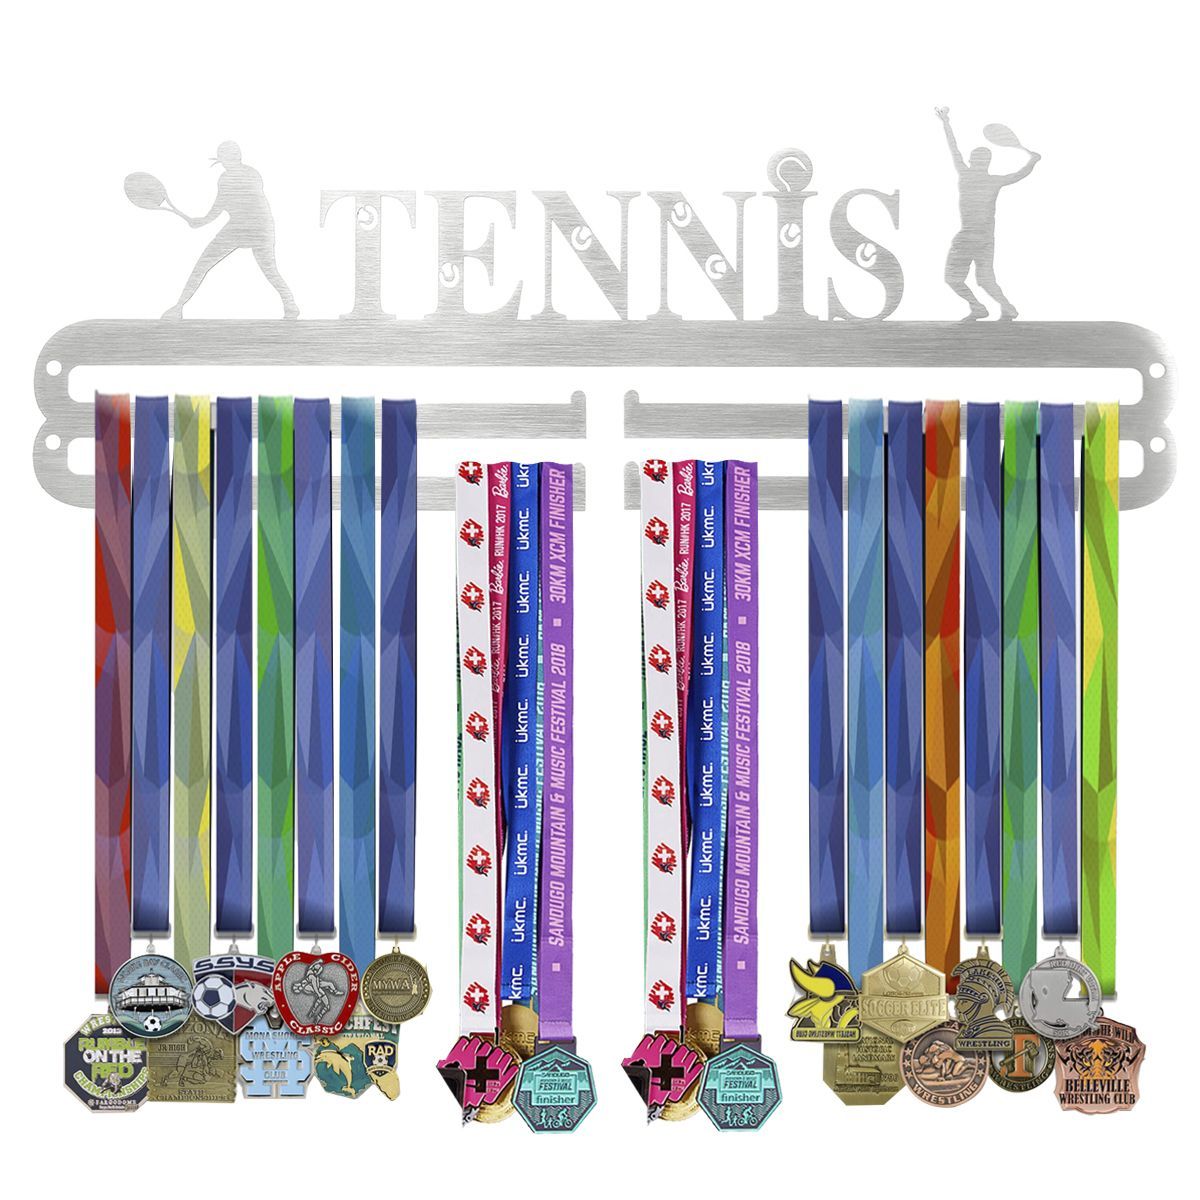 Sporting-Medal-Hangers-Tennis-Gym-Football-Basketball-Holder-Wall-Display-Rack-1679187